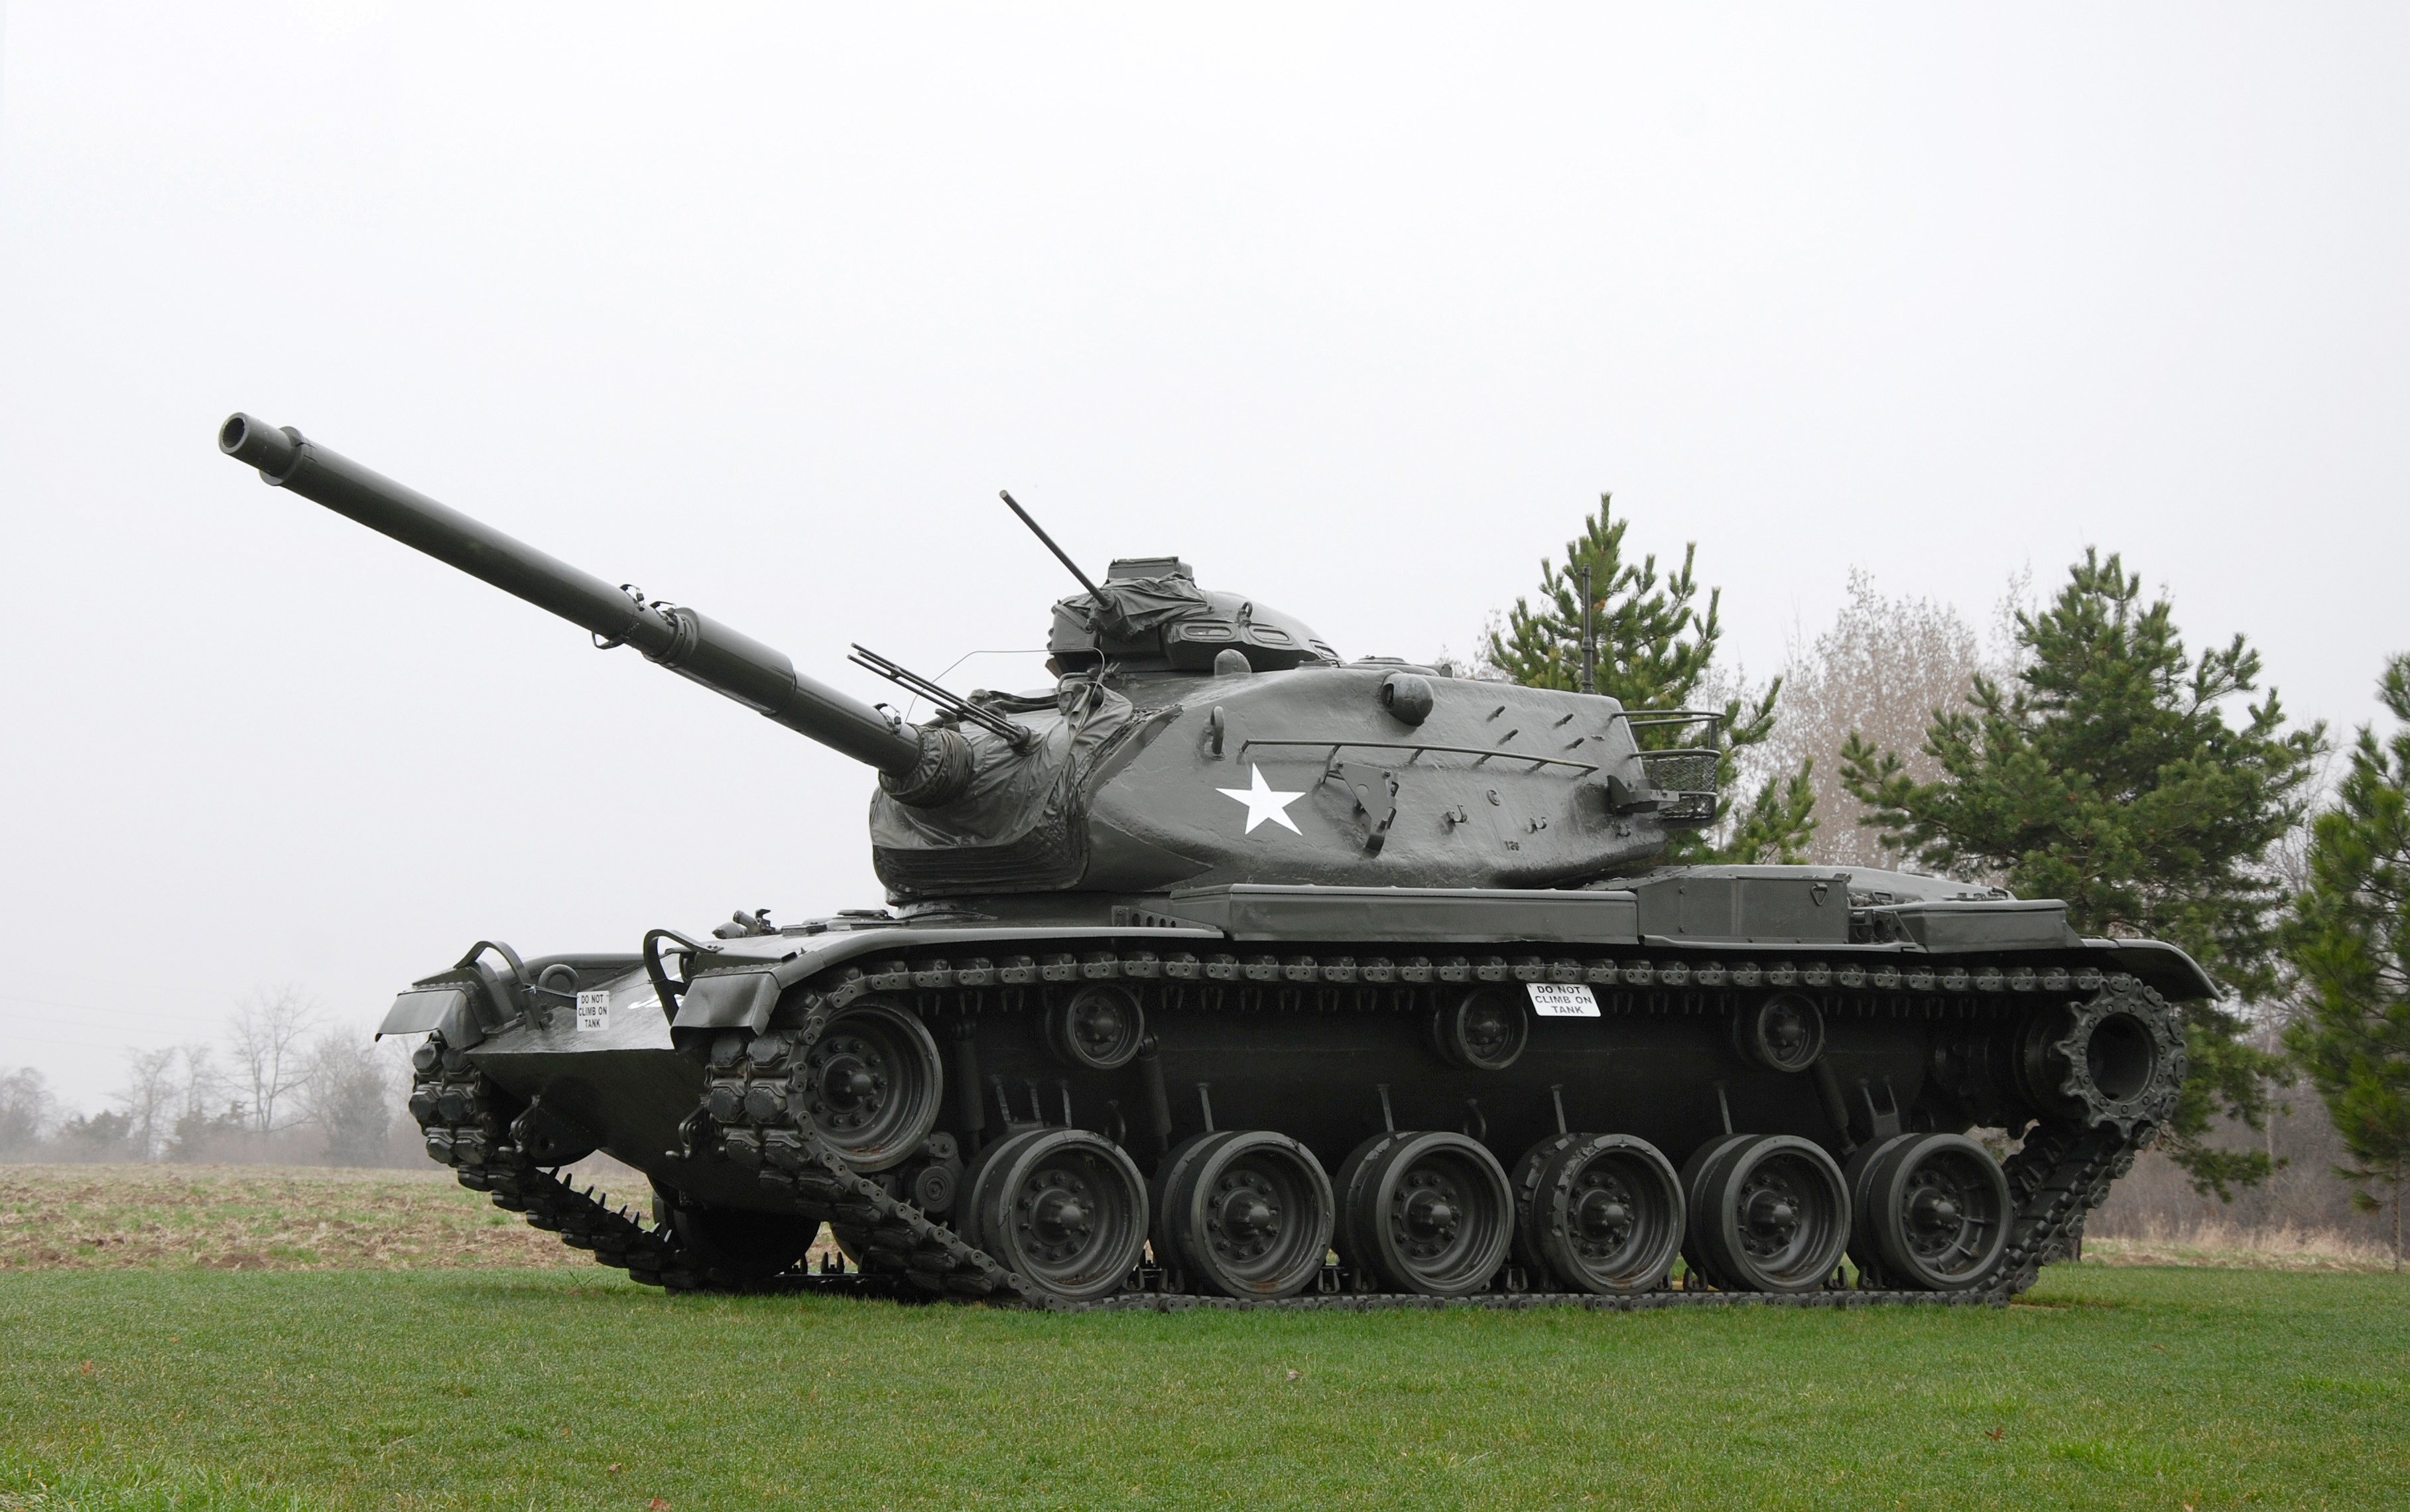 us main battle tank 60s